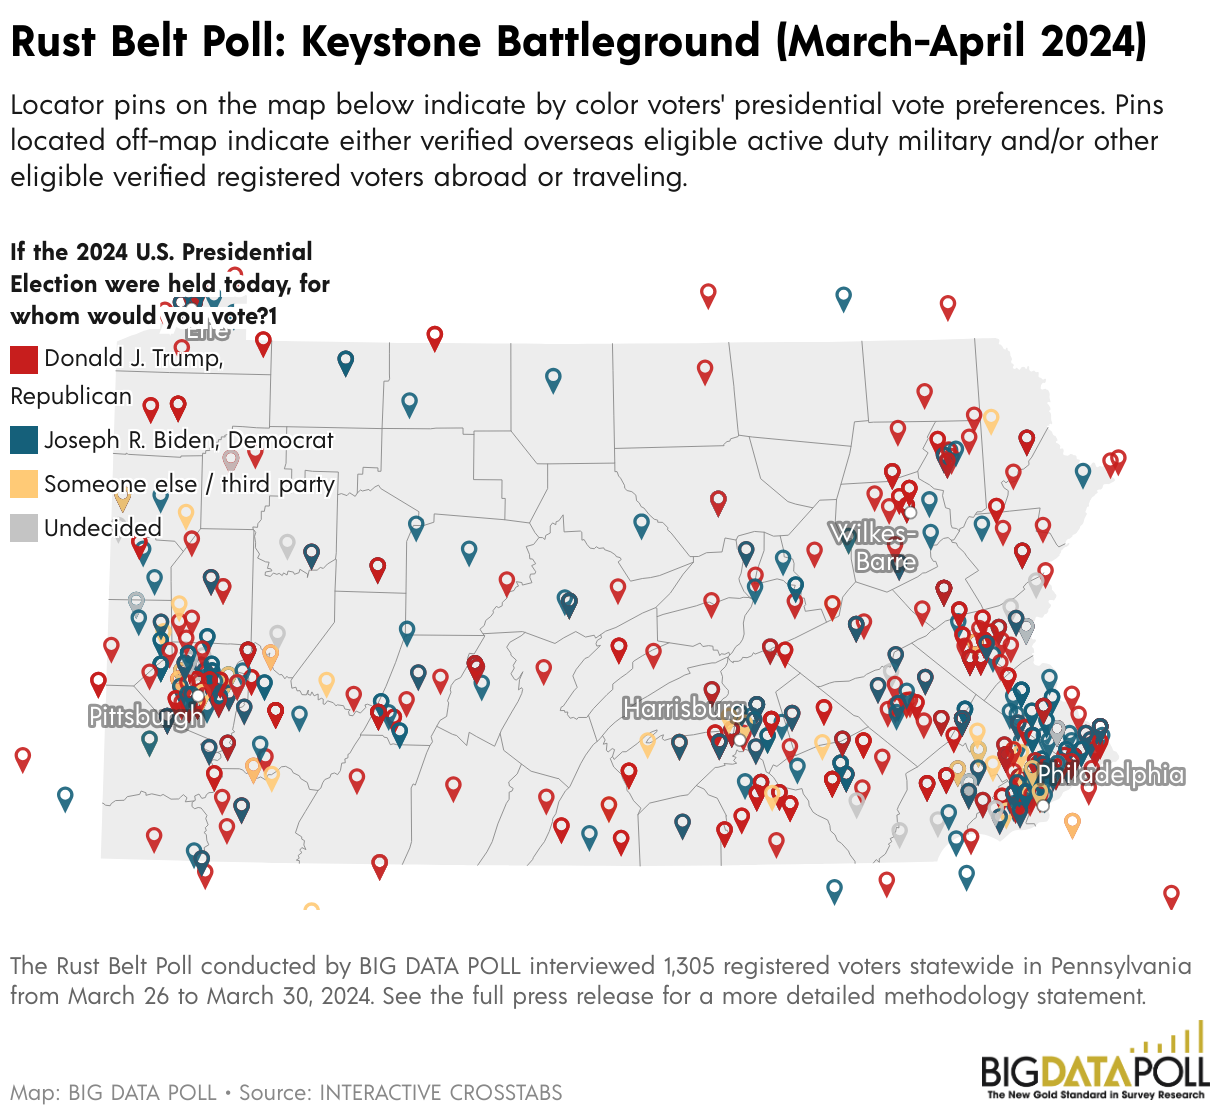 Rust Belt Poll: Keystone Battleground (March-April 2024)